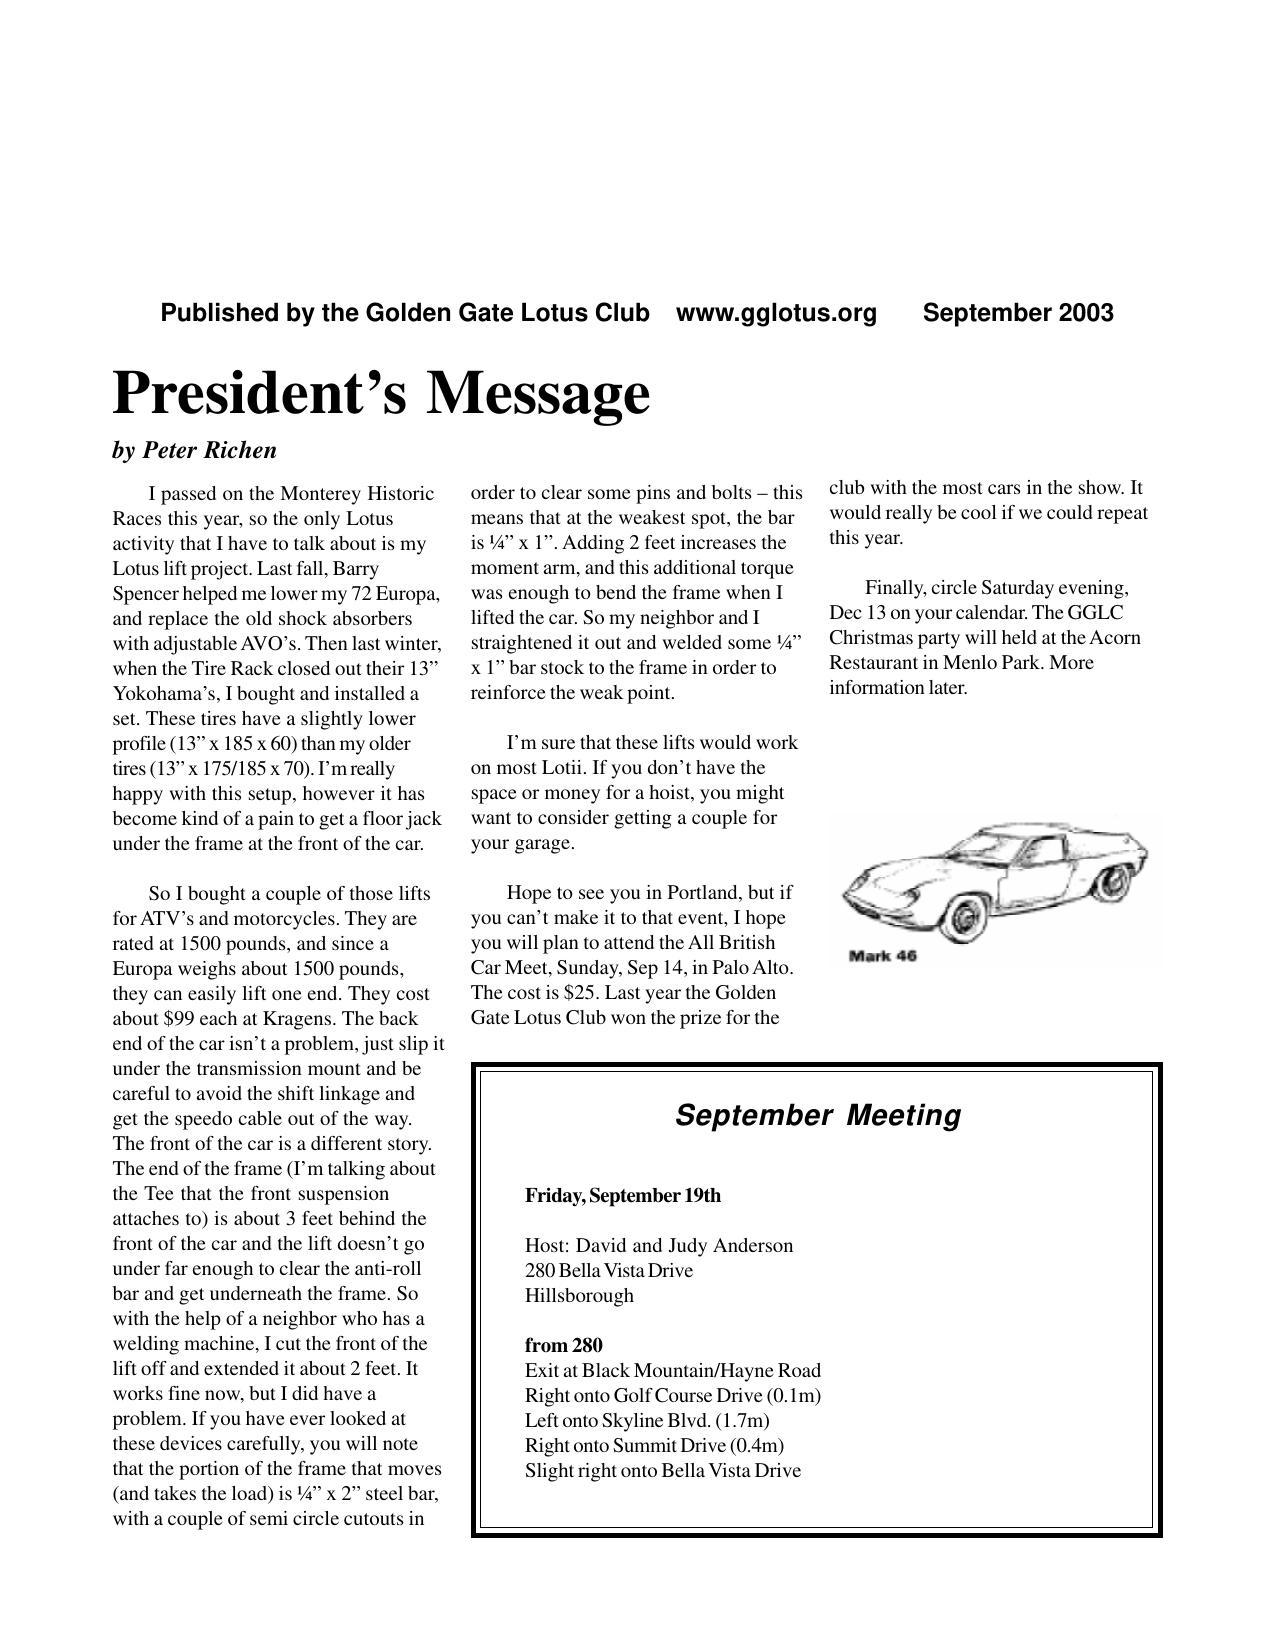 lotus-club-newsletter---september-2003.pdf